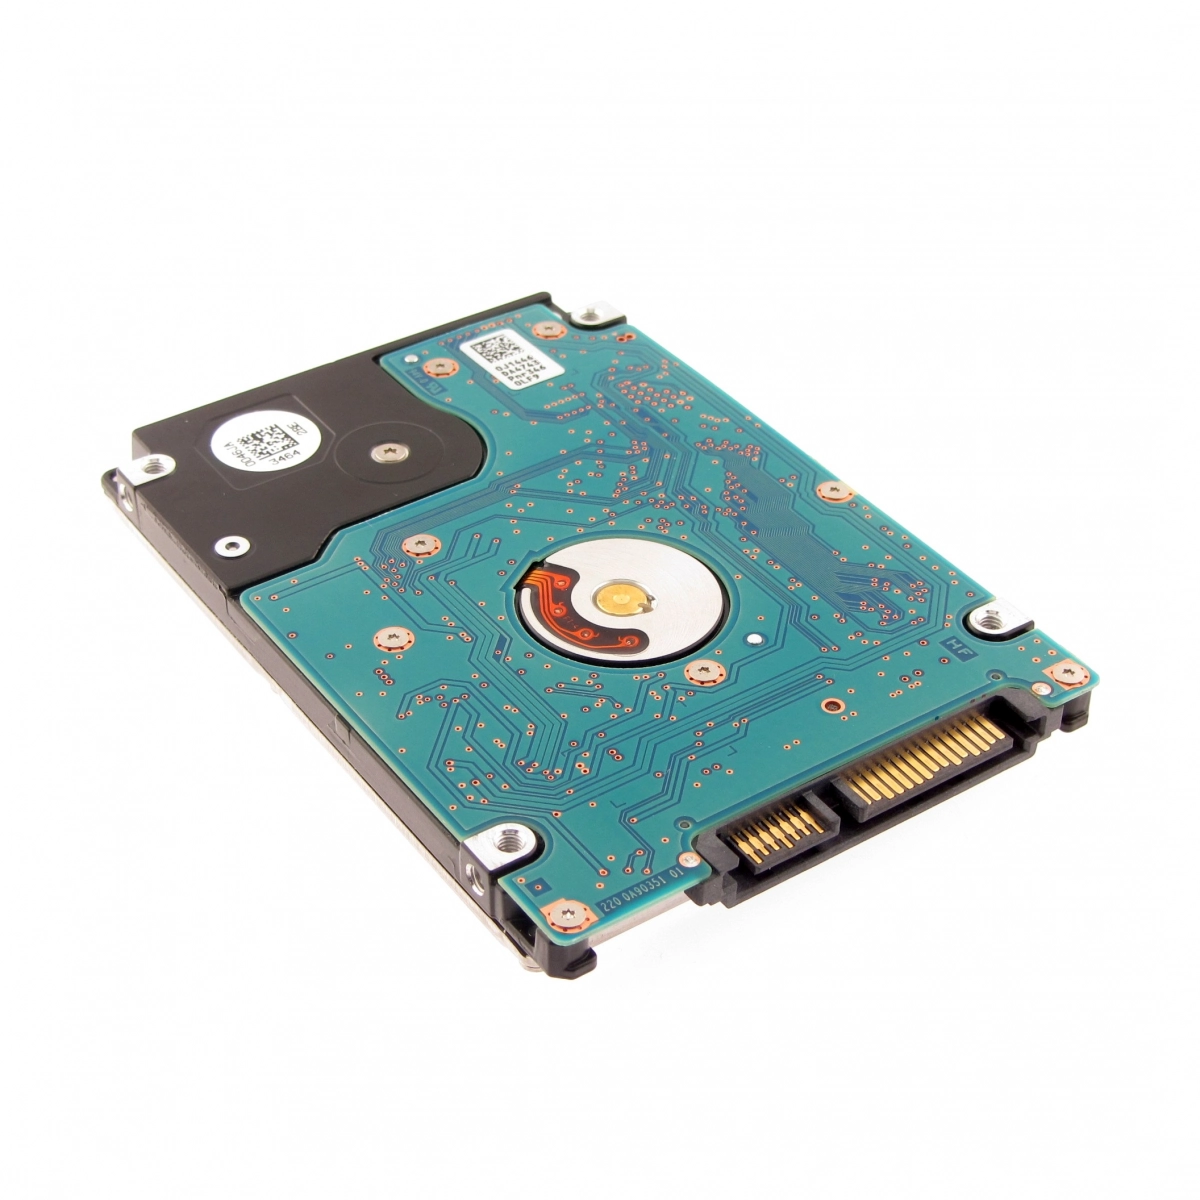 Notebook-Festplatte 500GB, 7200rpm, 128MB für LENOVO G710